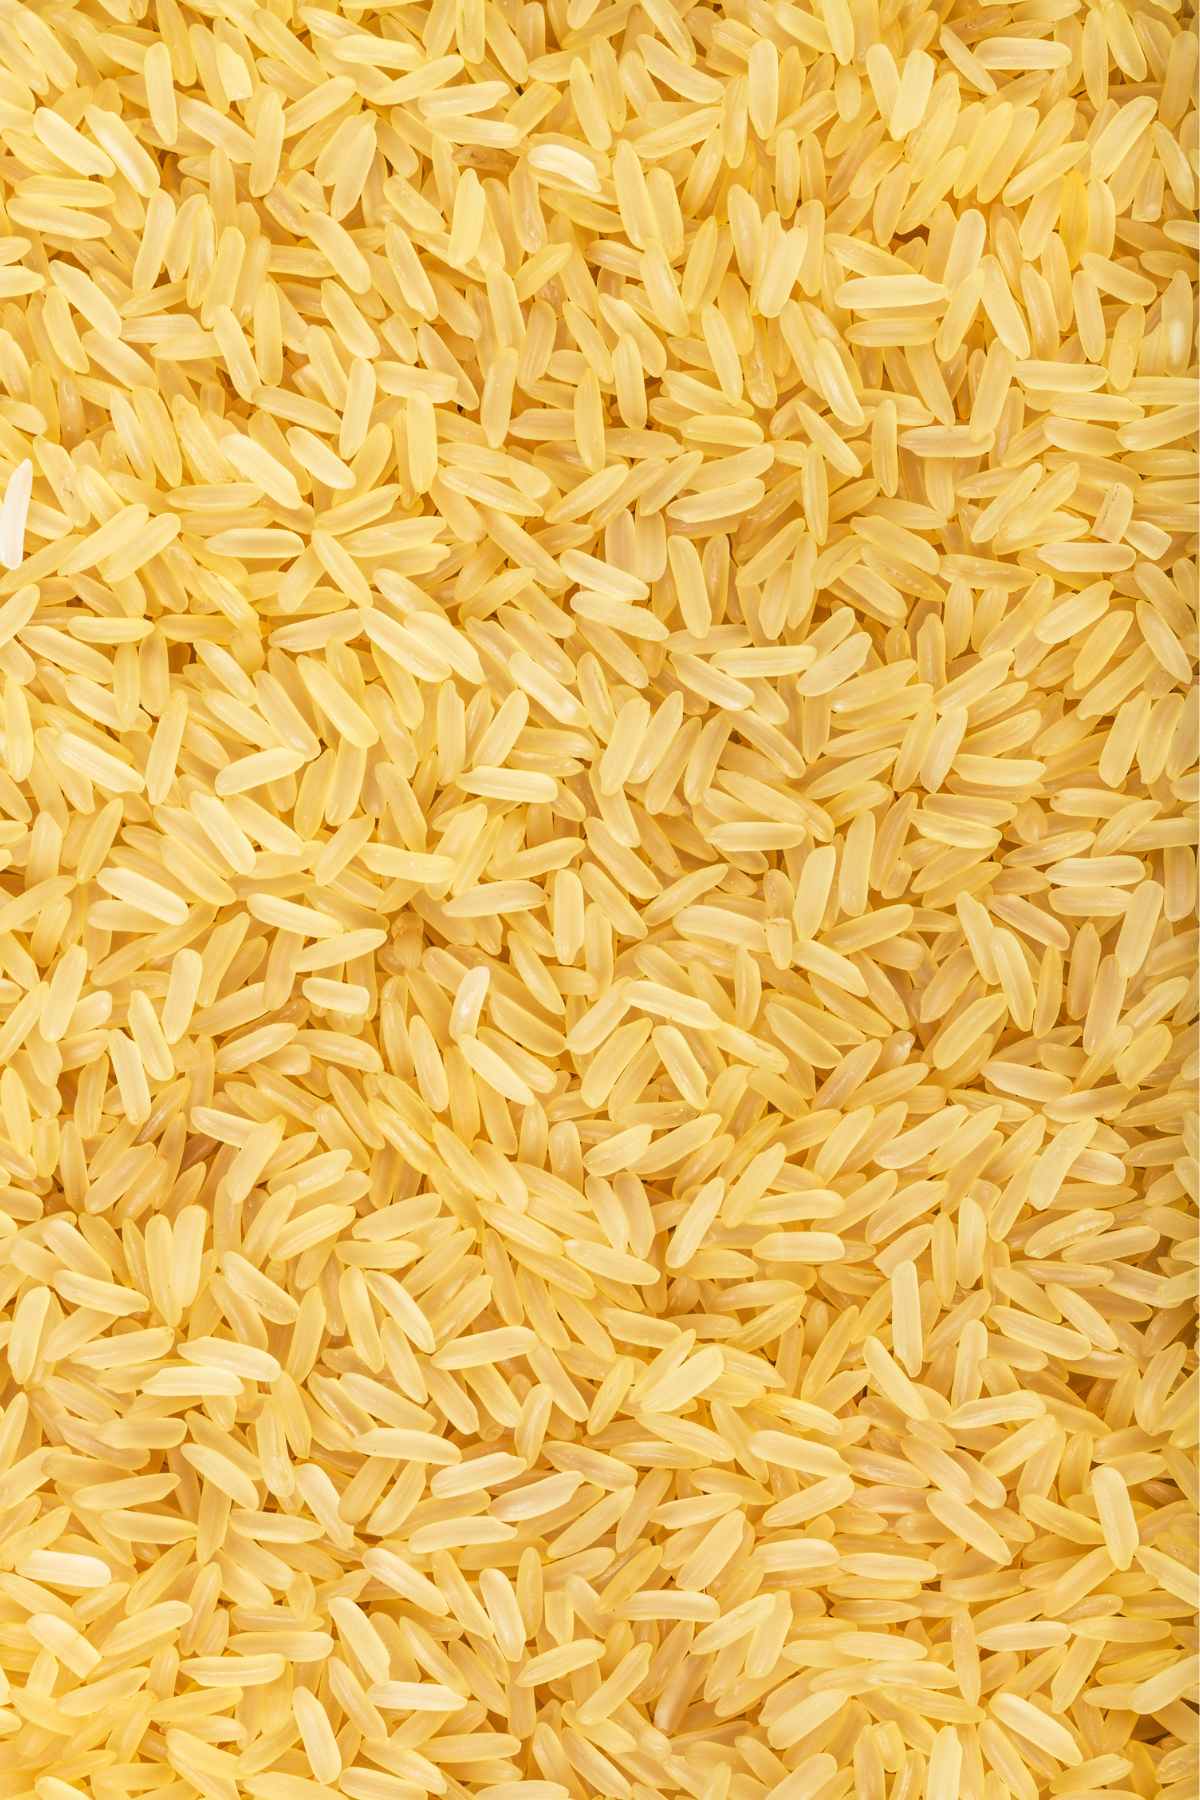 Taiwanese rice